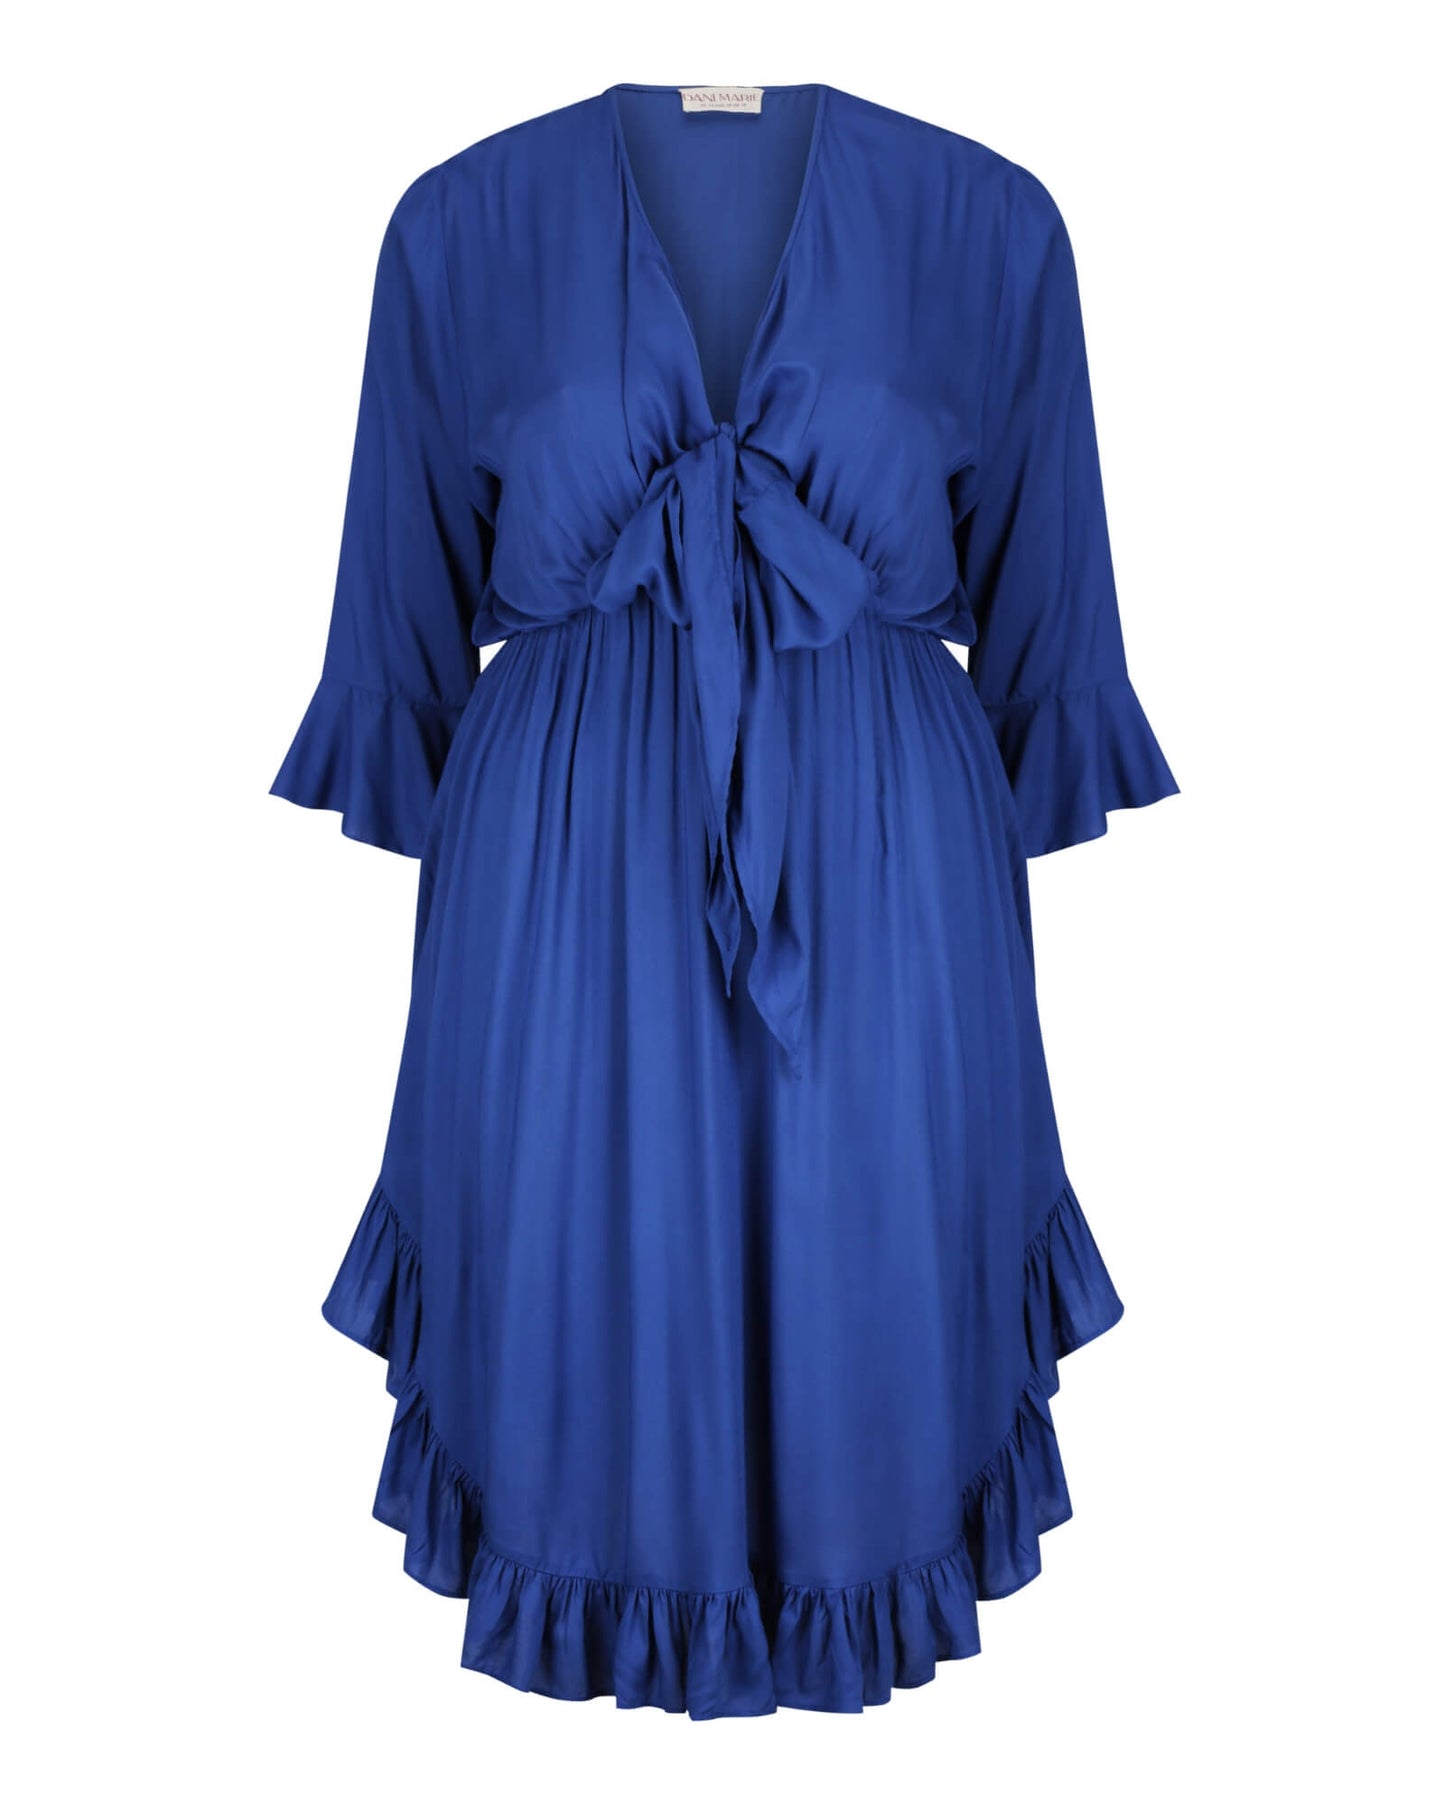 Arielle Tie Front Midi Dress in Cobalt